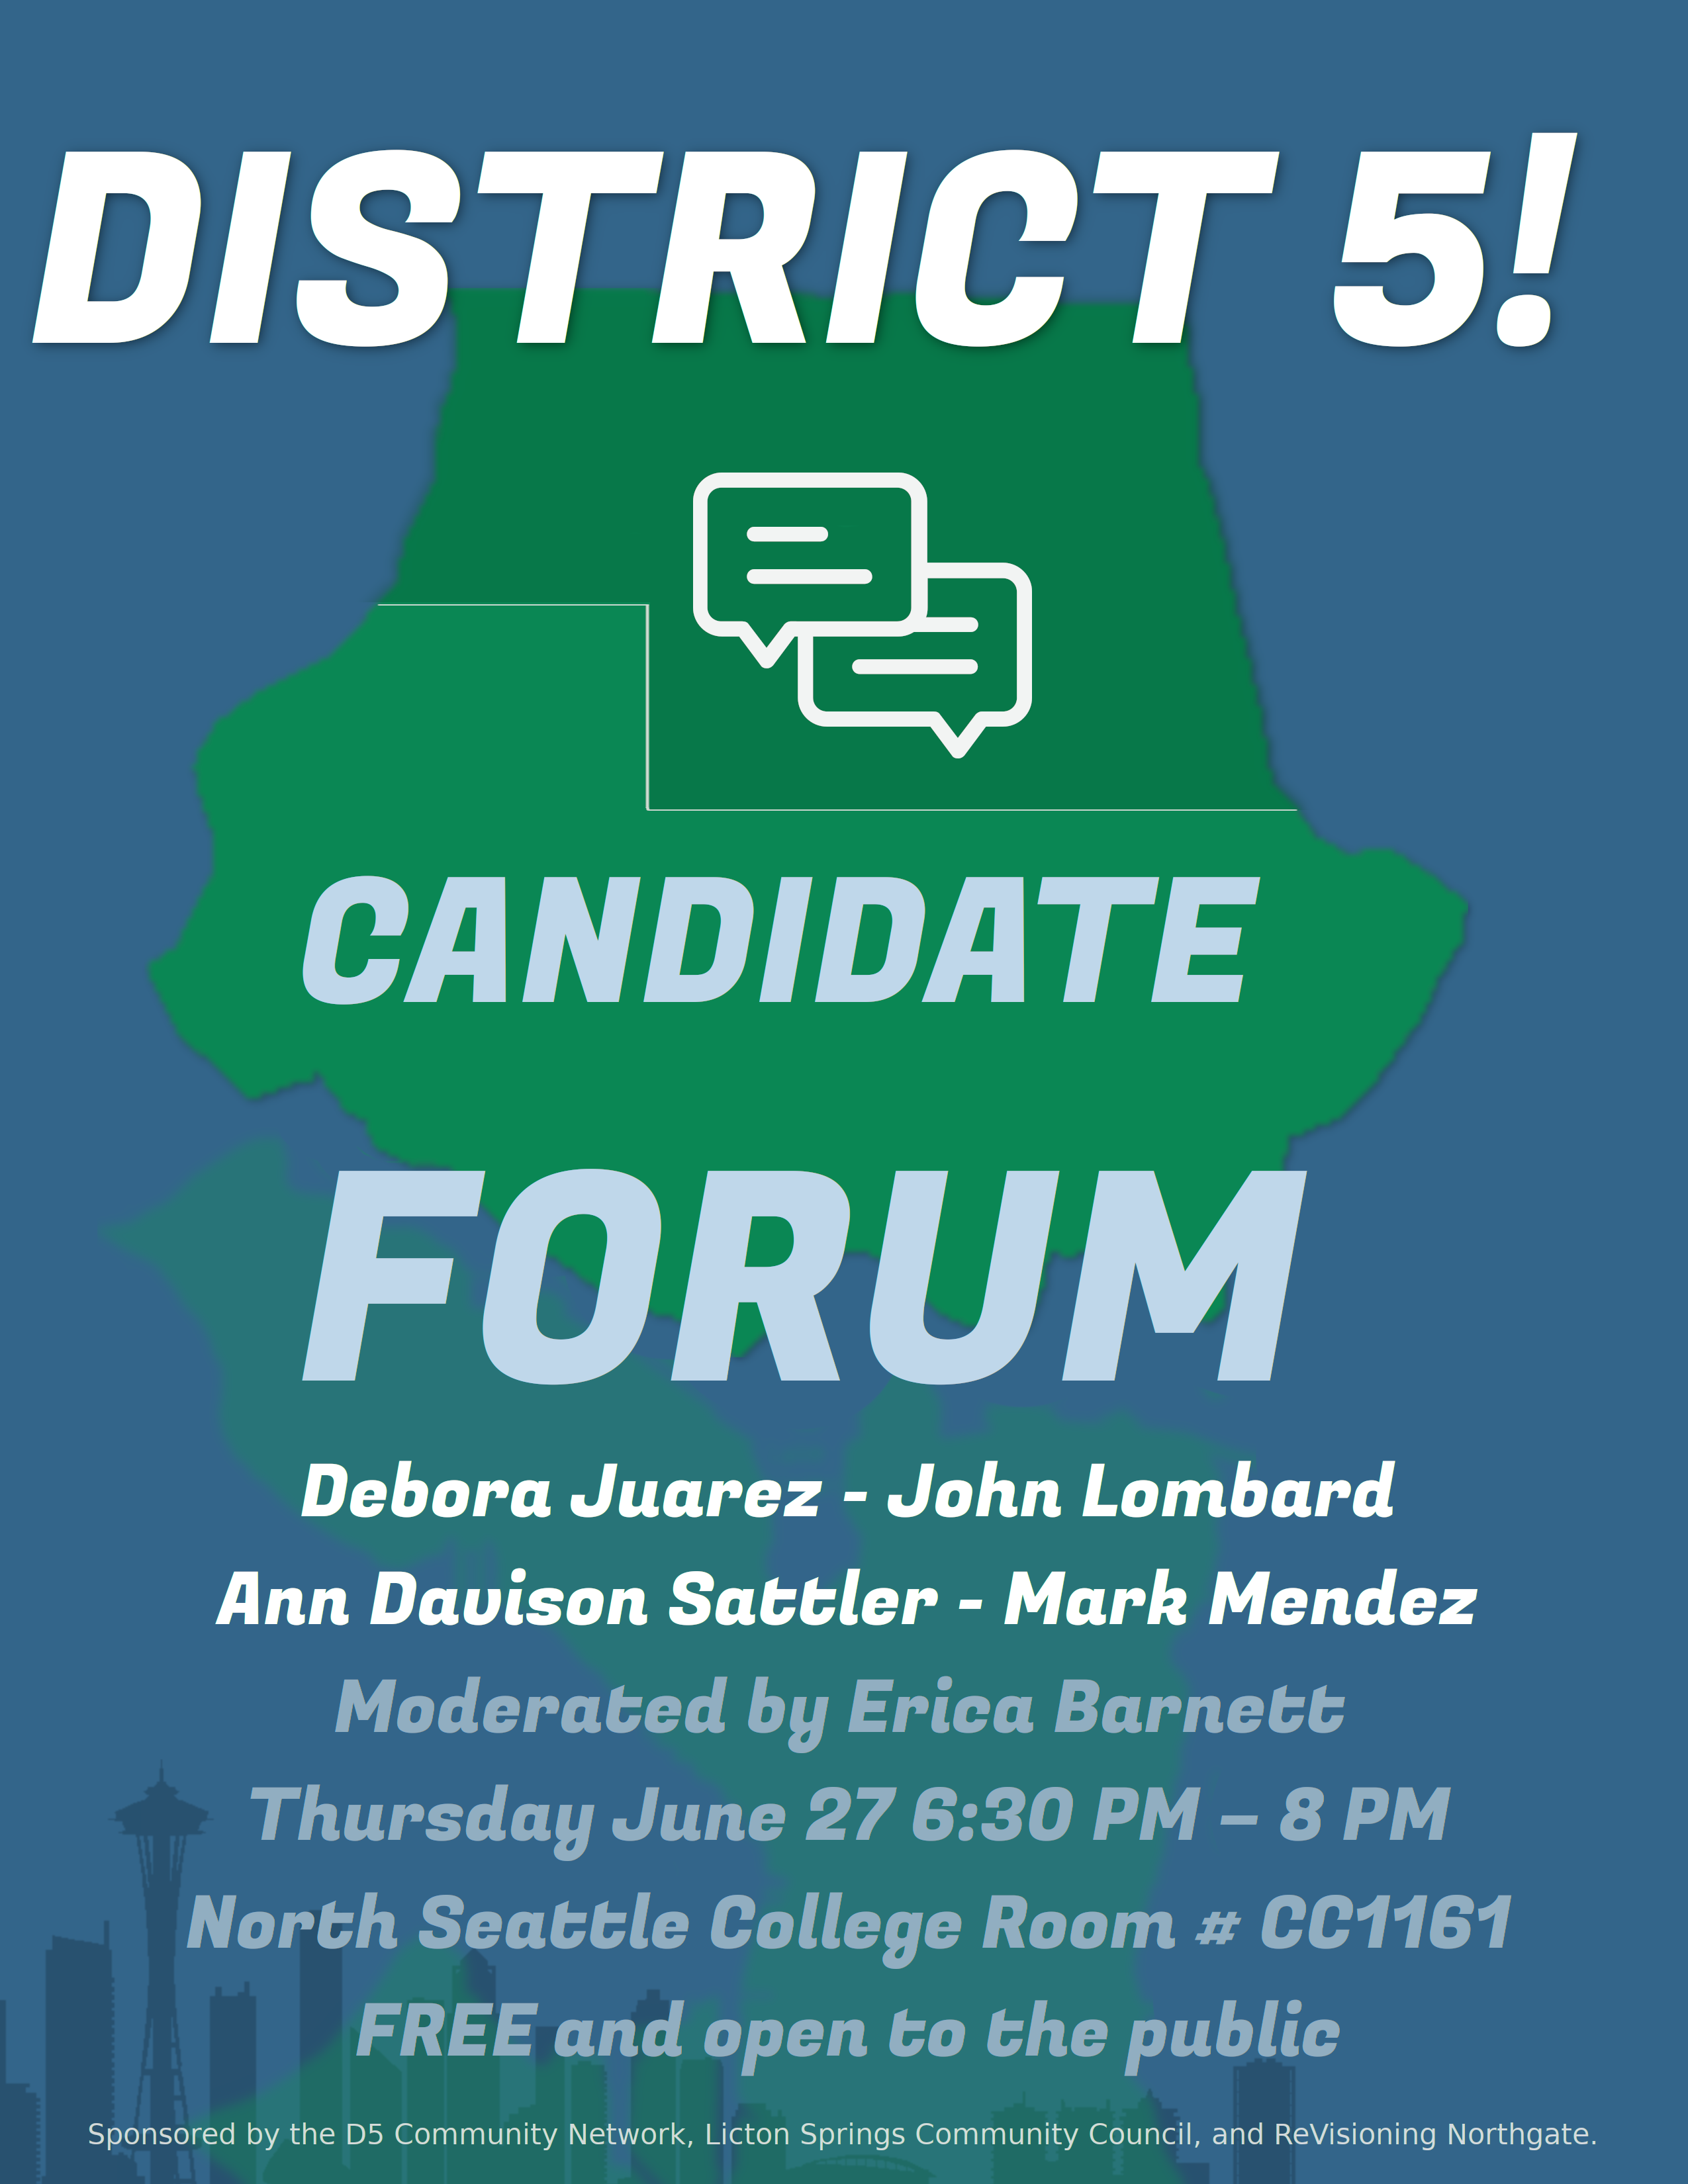 D5 Seattle City Council Candidate Forum!